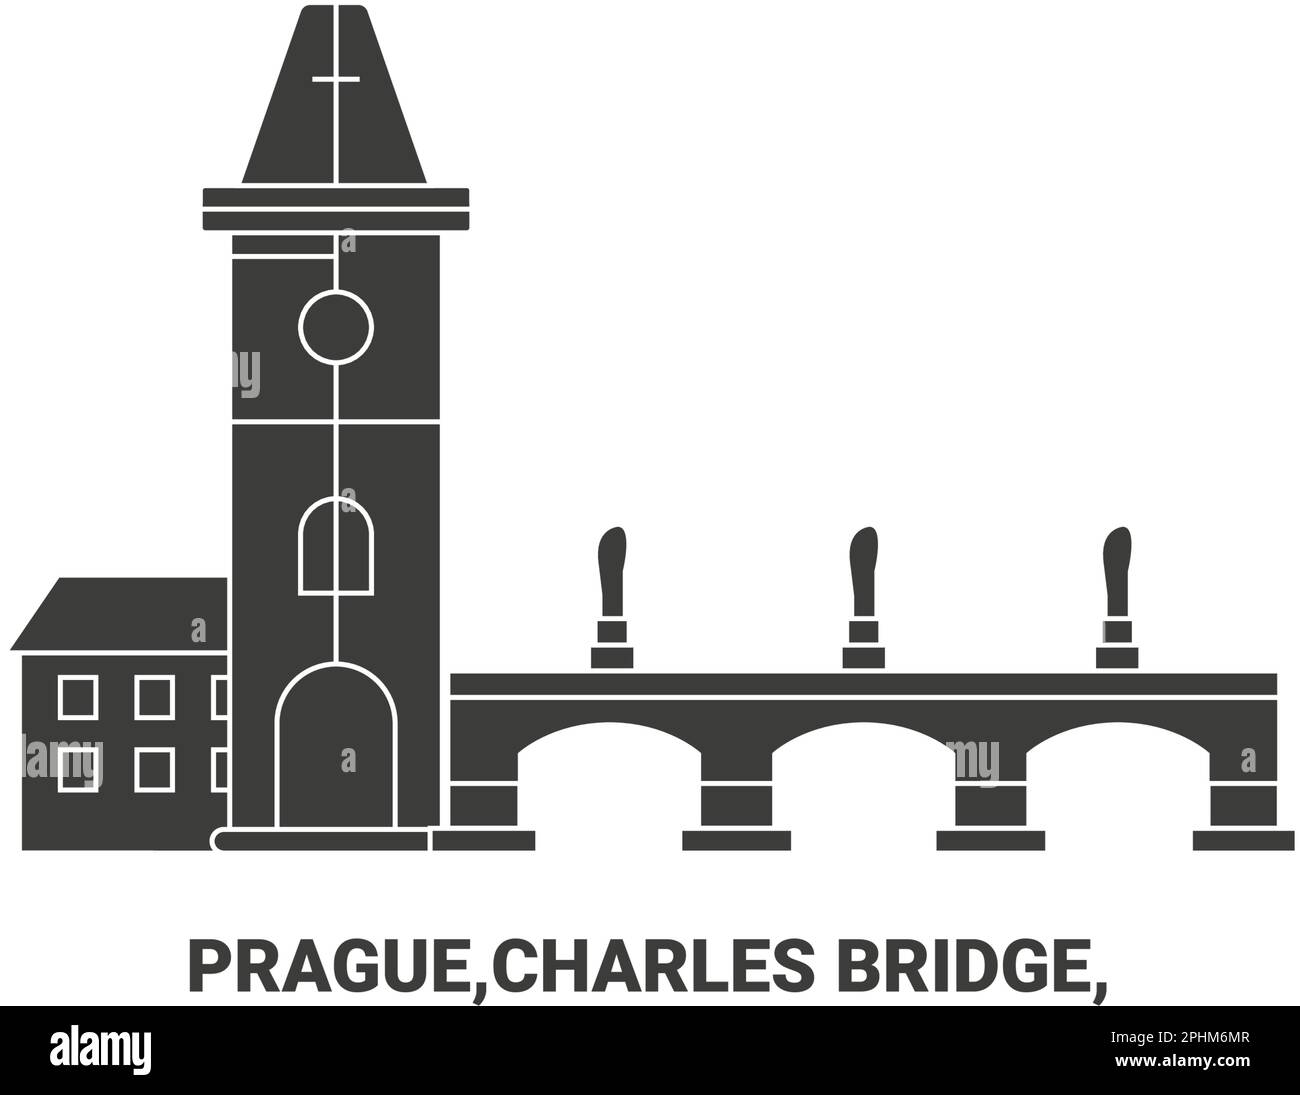 Czech Republic, Prague,Charles Bridge travel landmark vector illustration Stock Vector